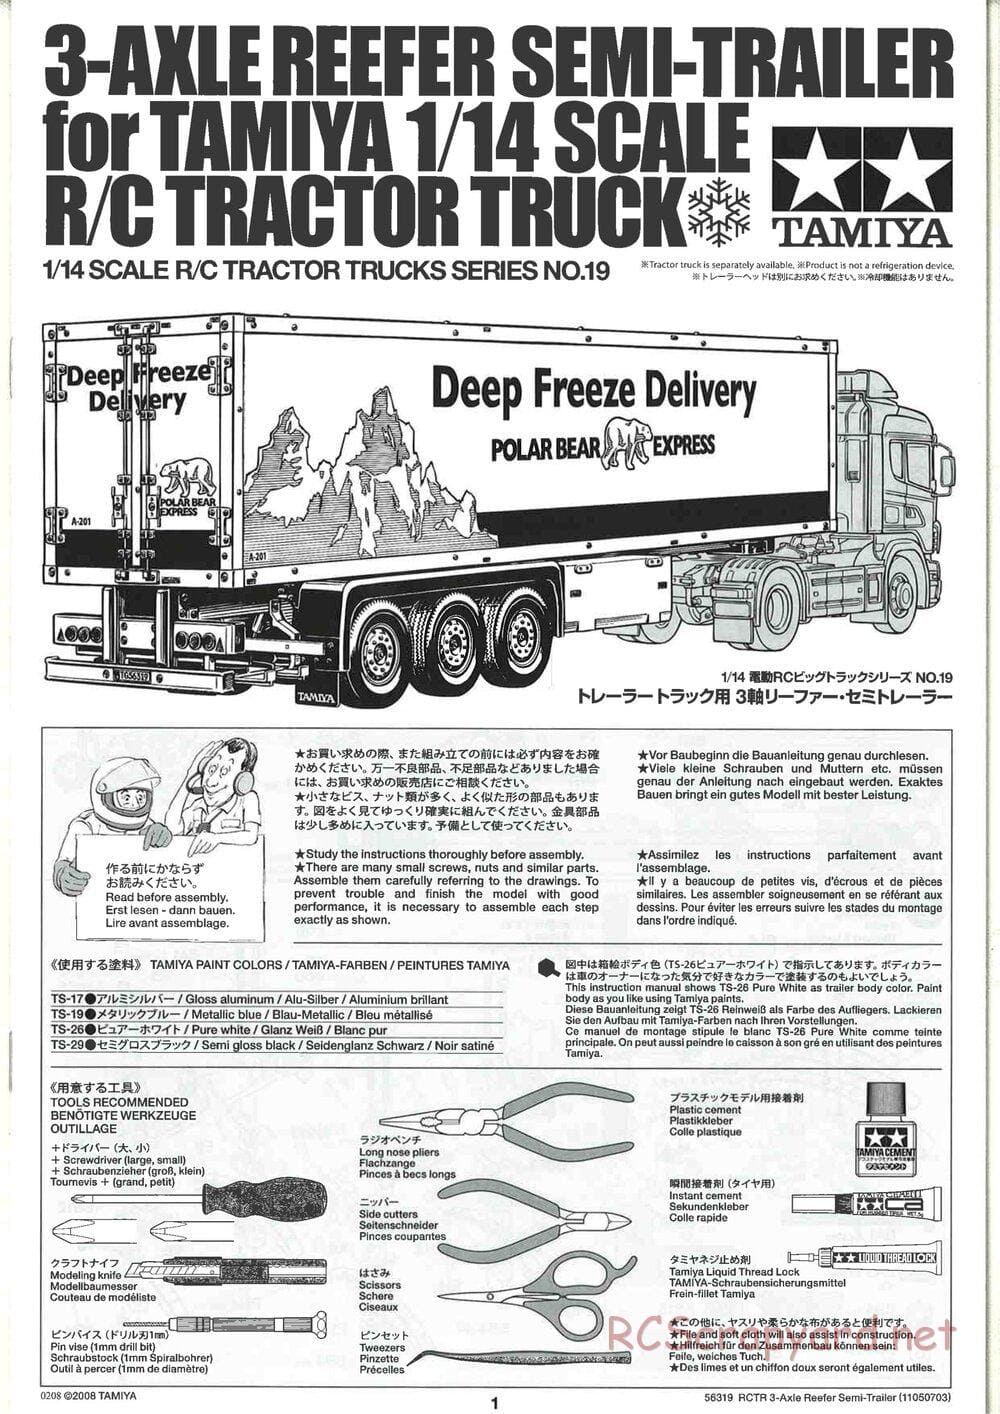 Tamiya - Semi Reefer Trailer Chassis - Manual - Page 1